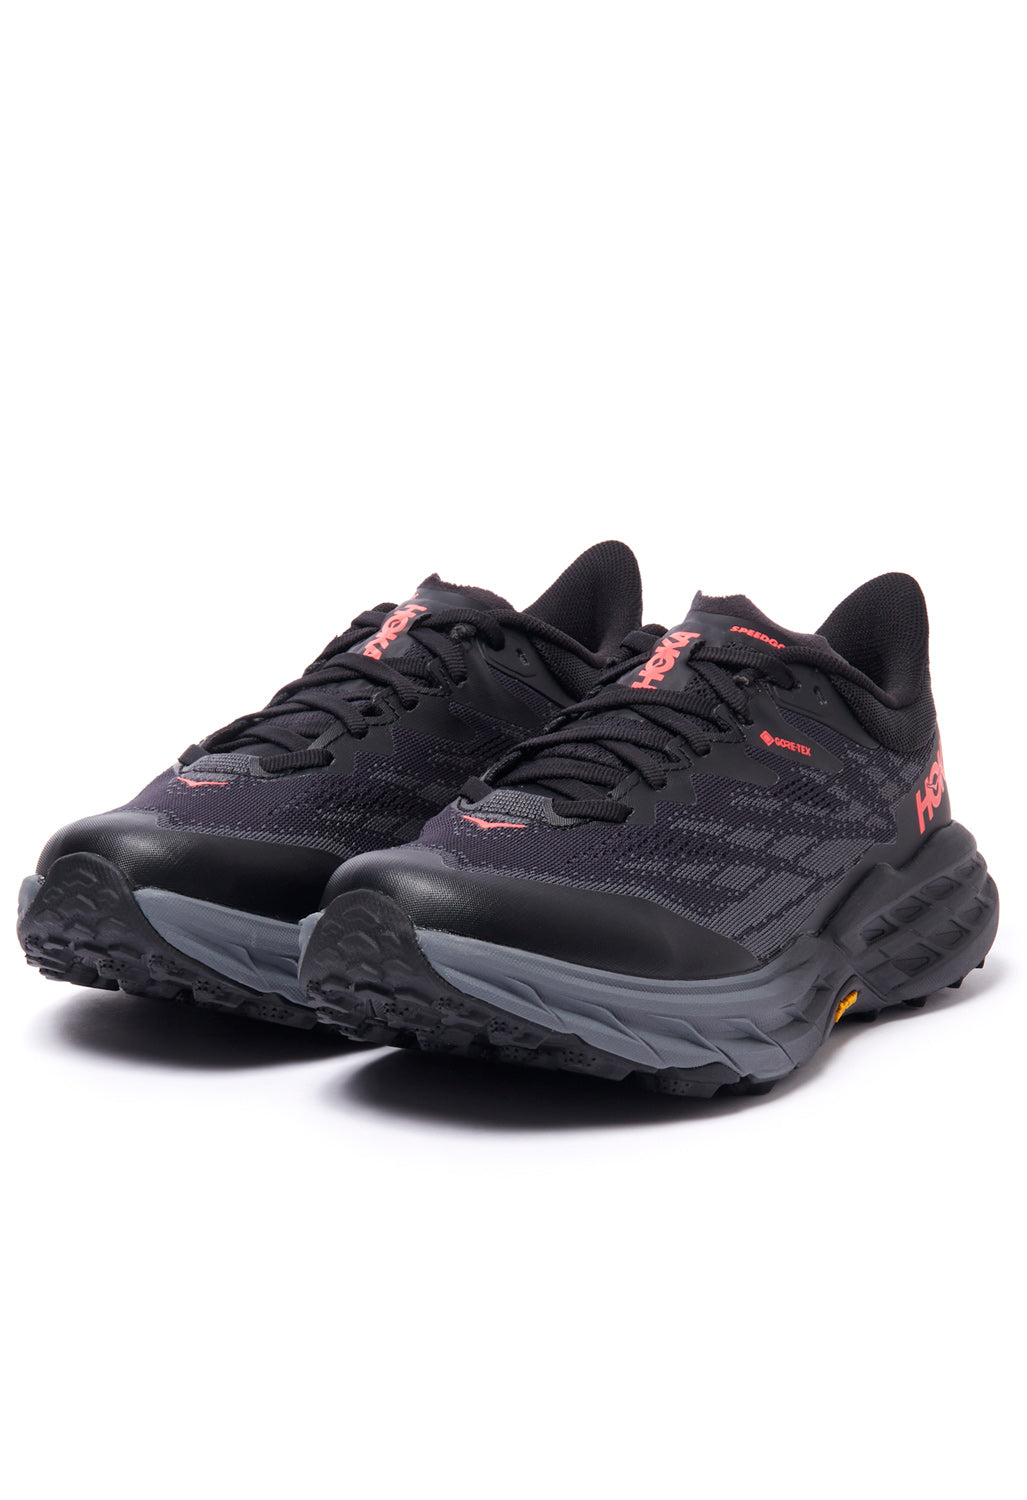 Hoka Speedgoat 5 GORE-TEX Women's Trail Shoes - Black/Black